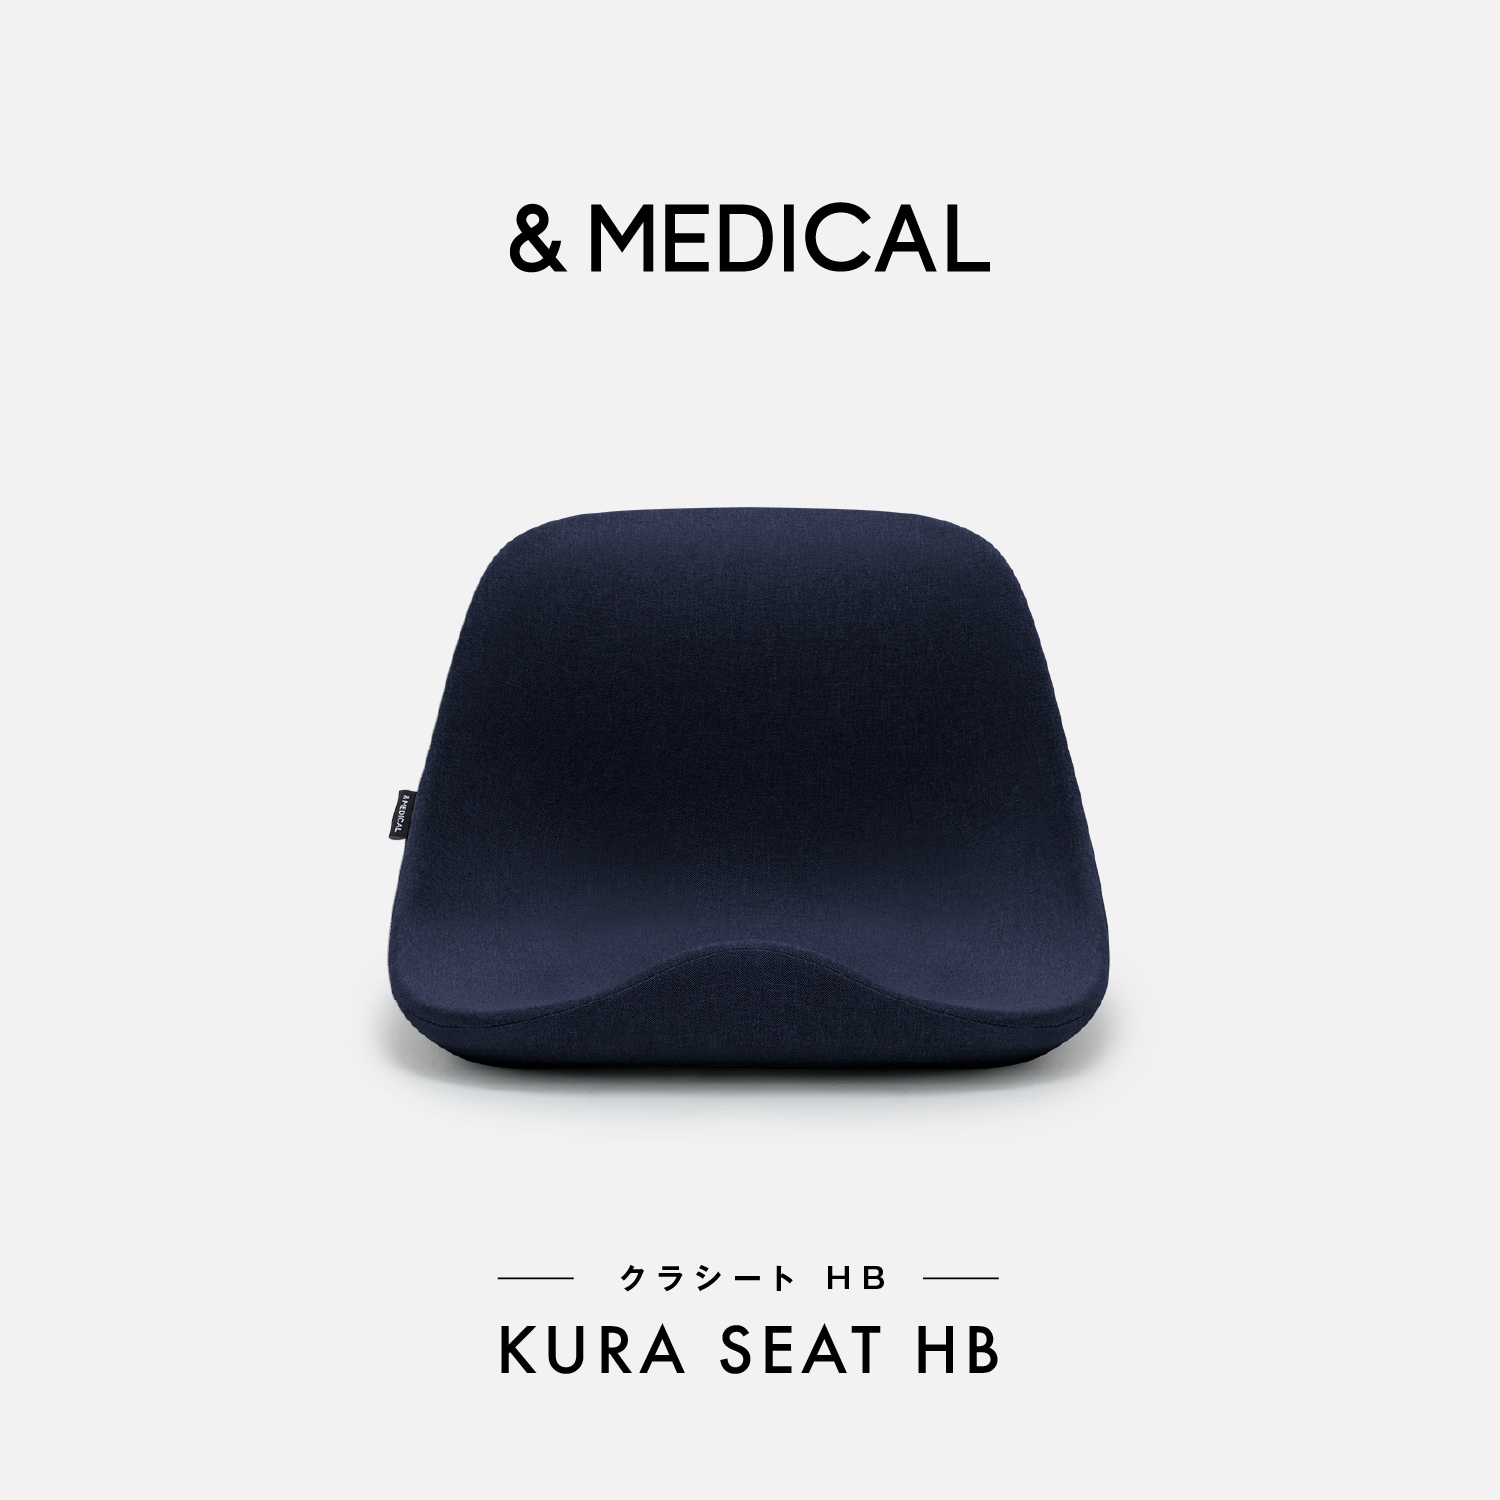 \u0026 MEDICAL「KURA SEAT HB（クラシート ハイバック）」